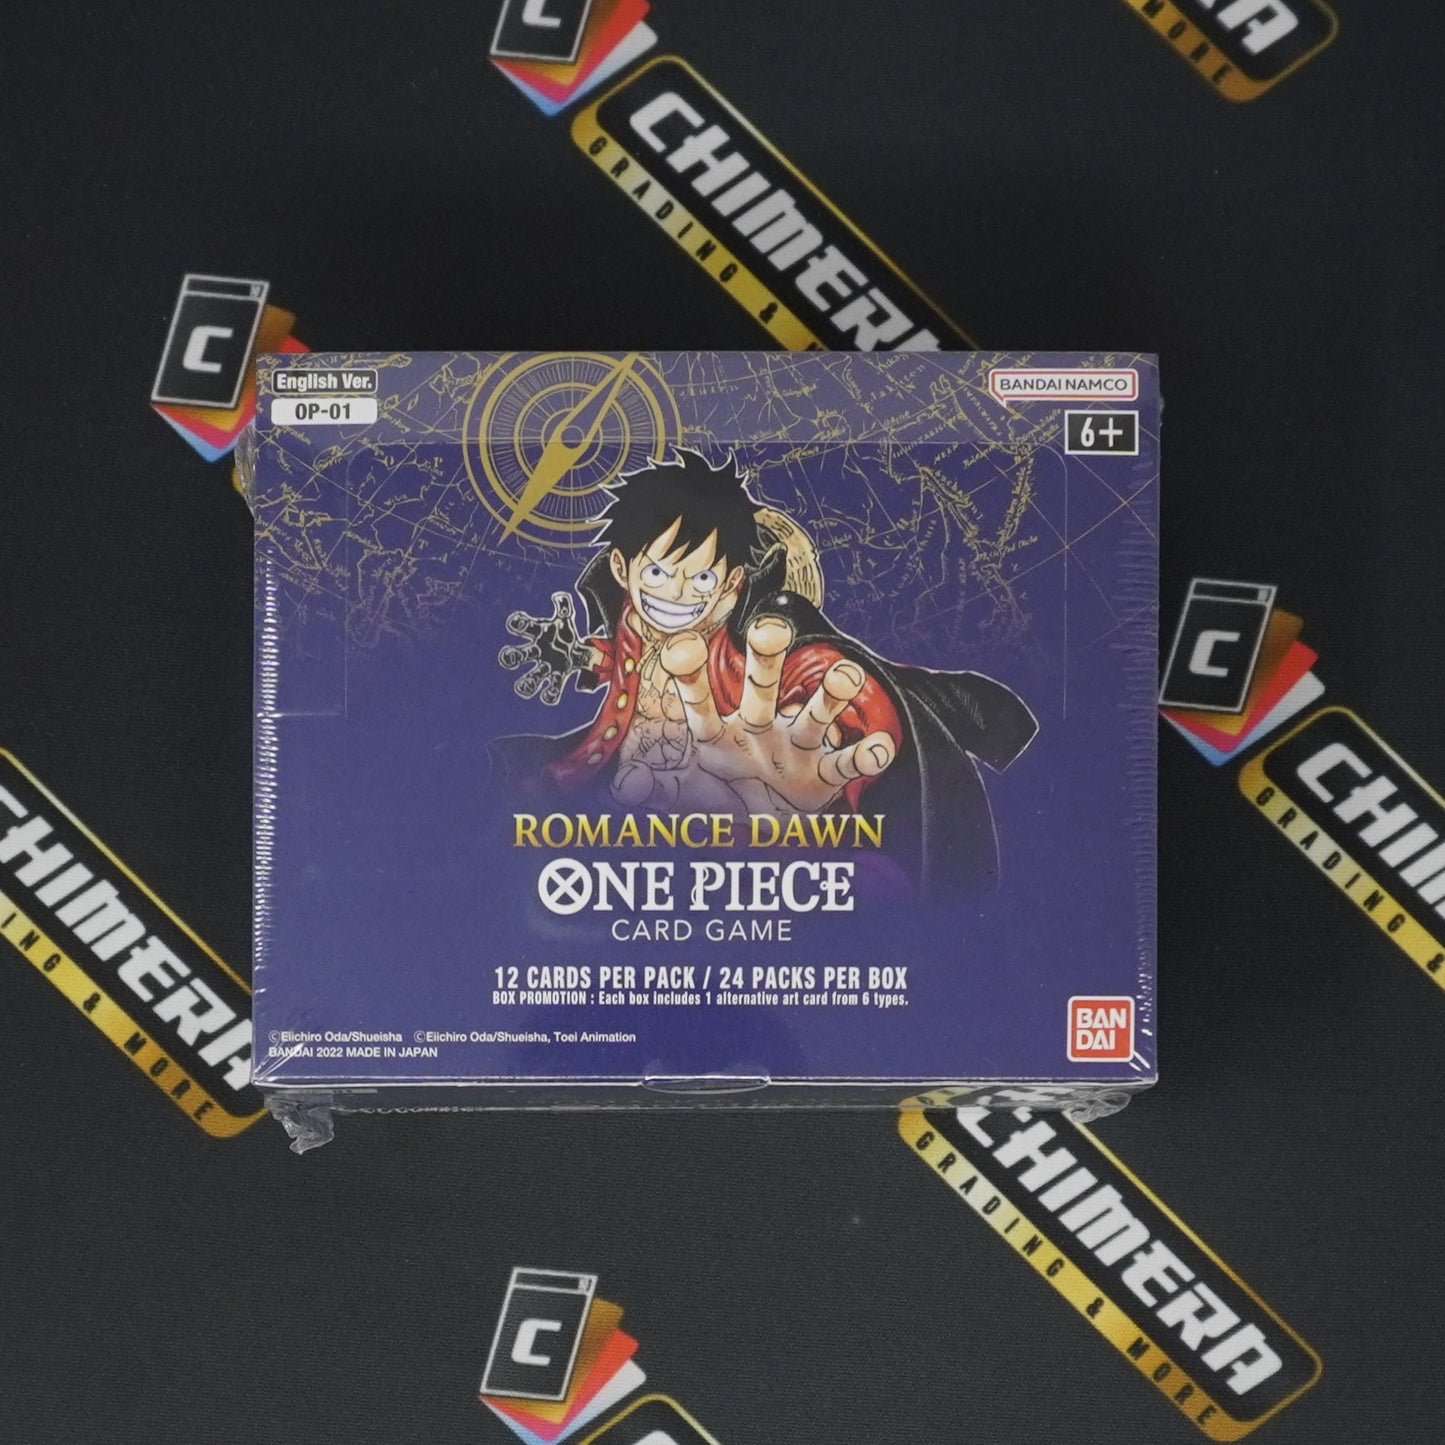 One Piece "Romance Dawn" OP-01 (White Bottom) Booster Box English